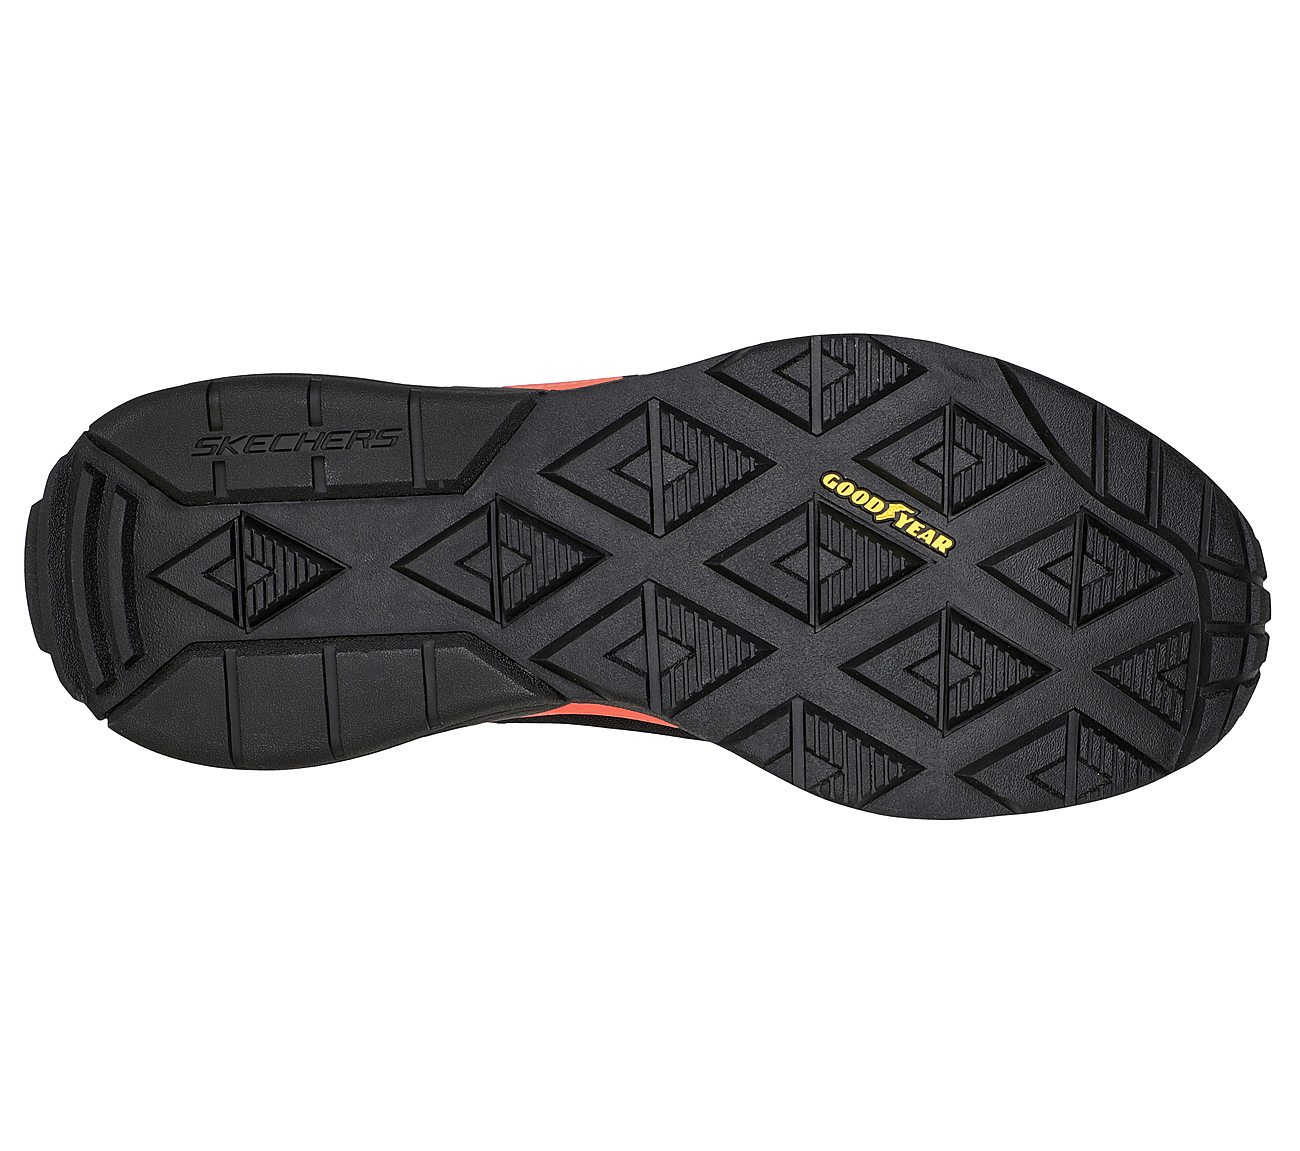 SKECH-AIR EXTREME V2 - BRAZEN, BLACK/RED Footwear Bottom View